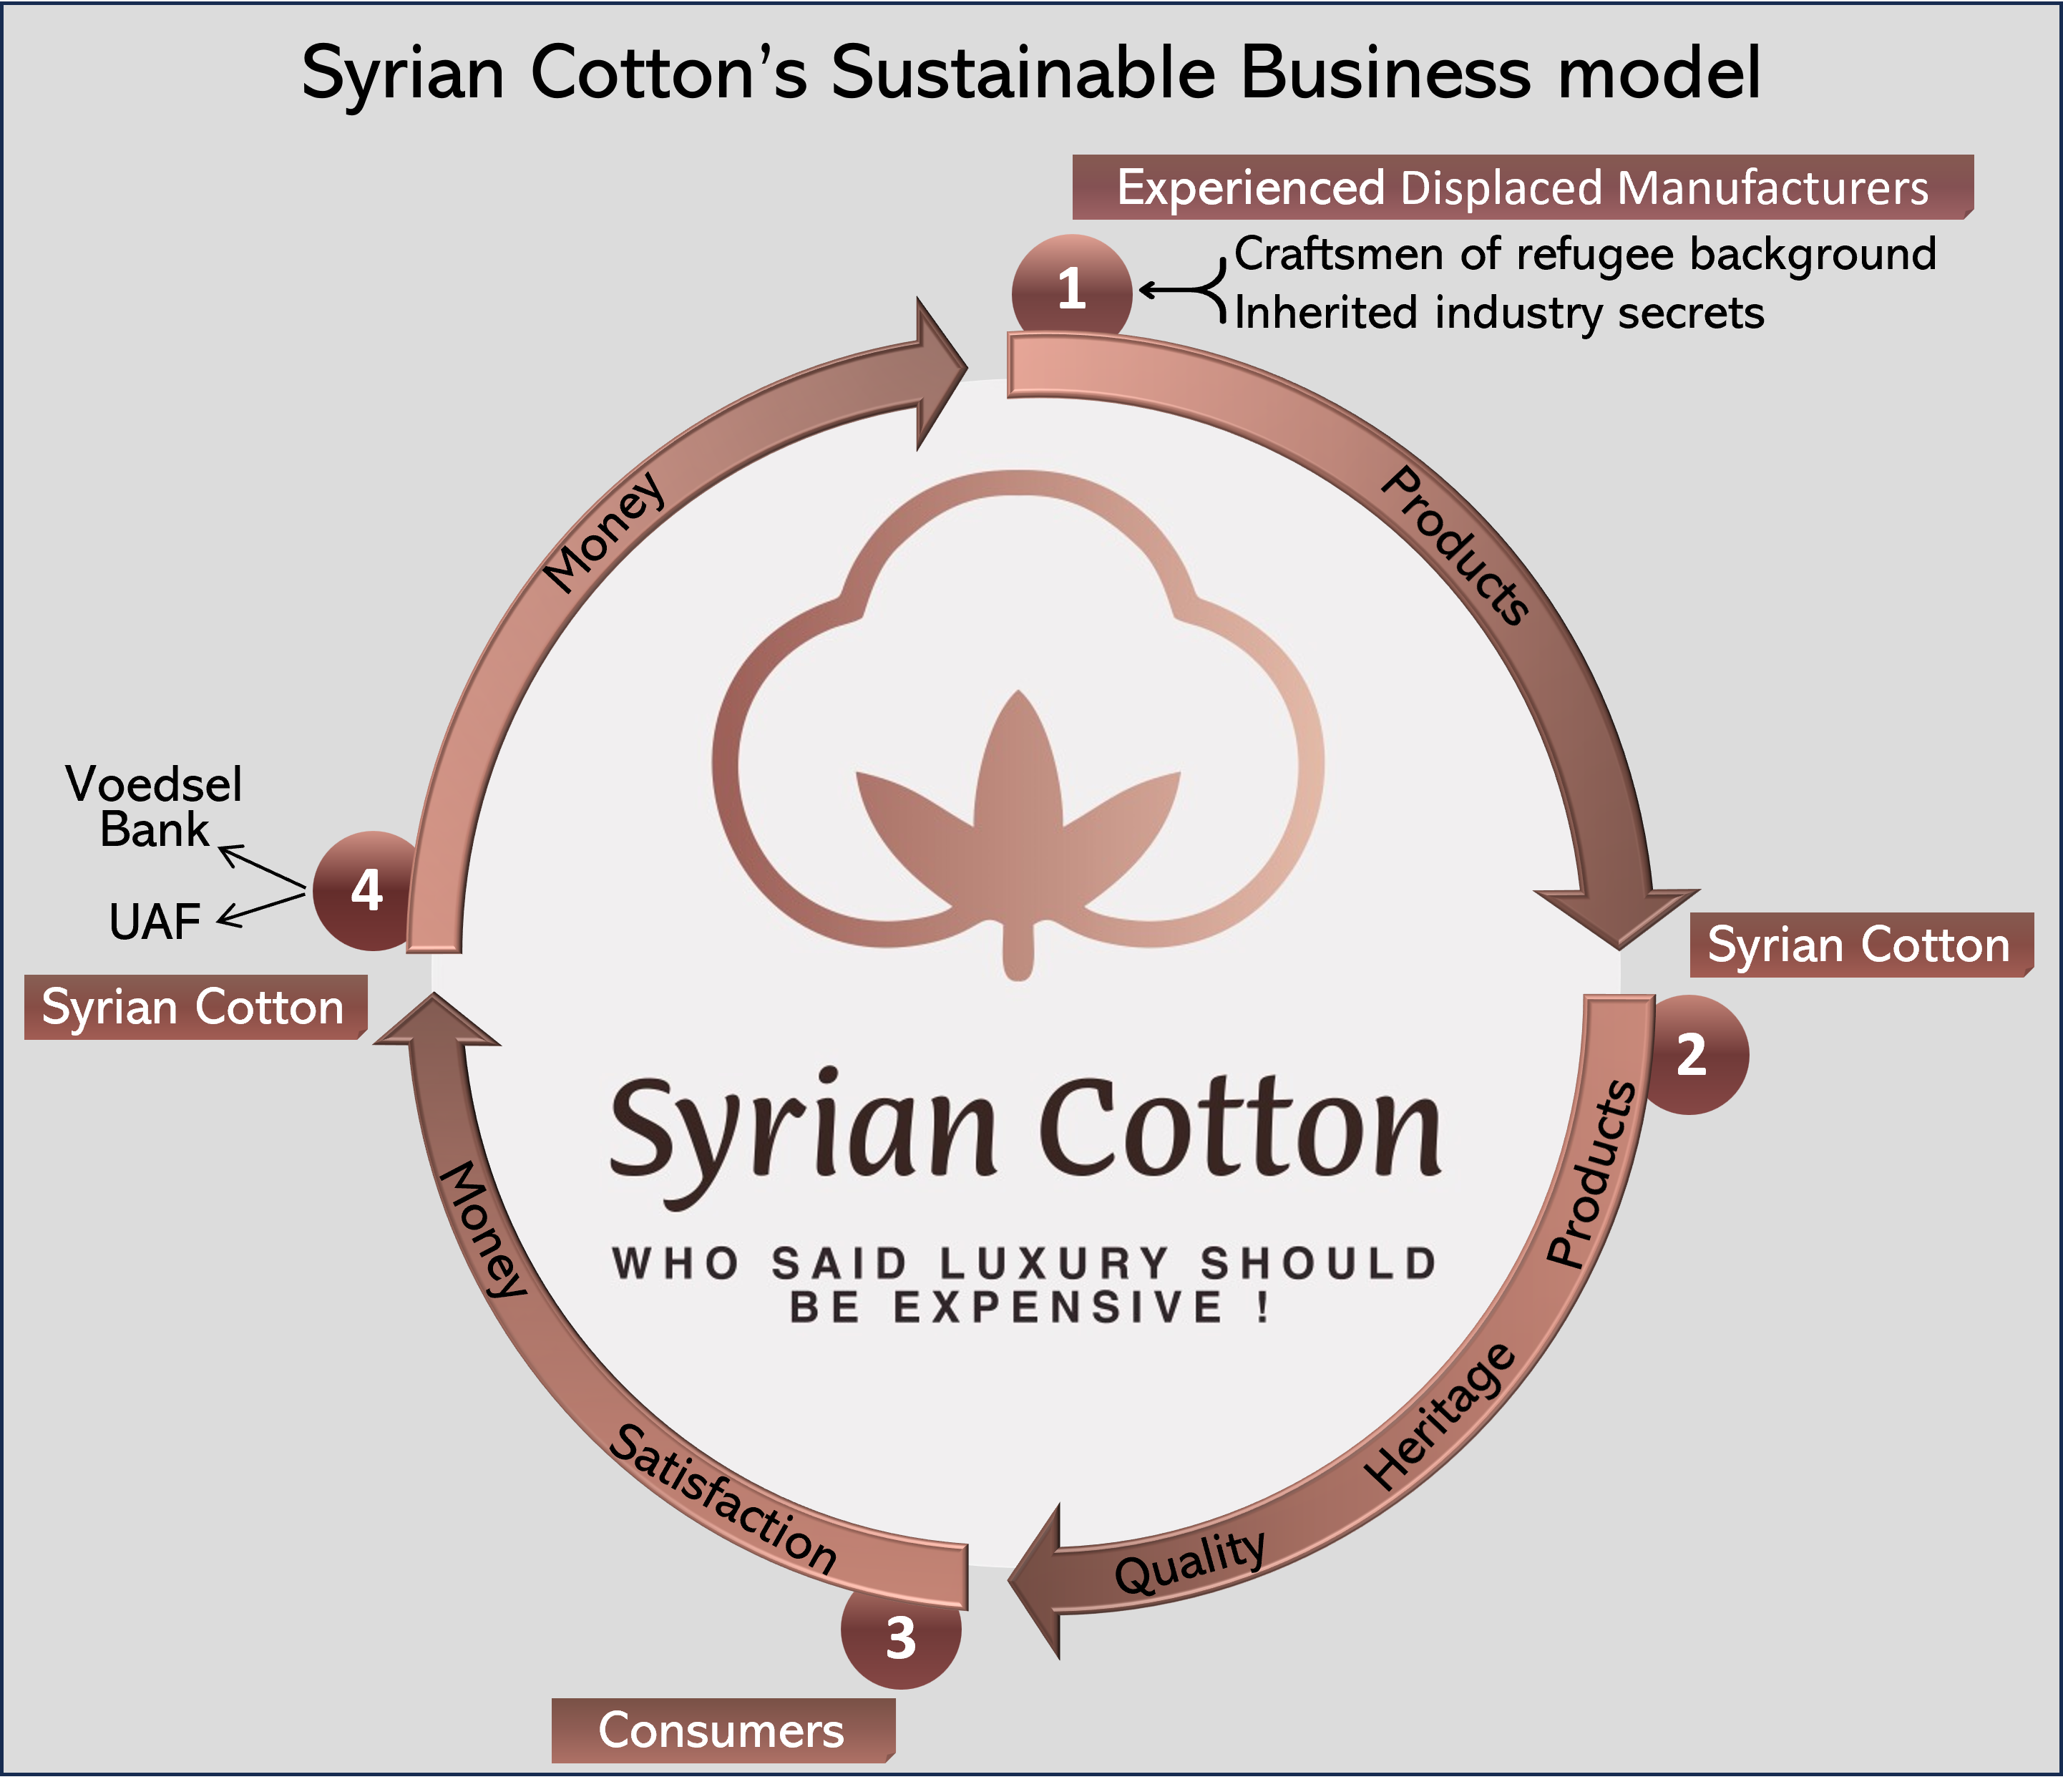 Syrain Cotton socail impact & Sustaible business model - Sustainability - SDGs - EMB - Corporate Responsibility Maatschappelijk verantwoordelijkheid